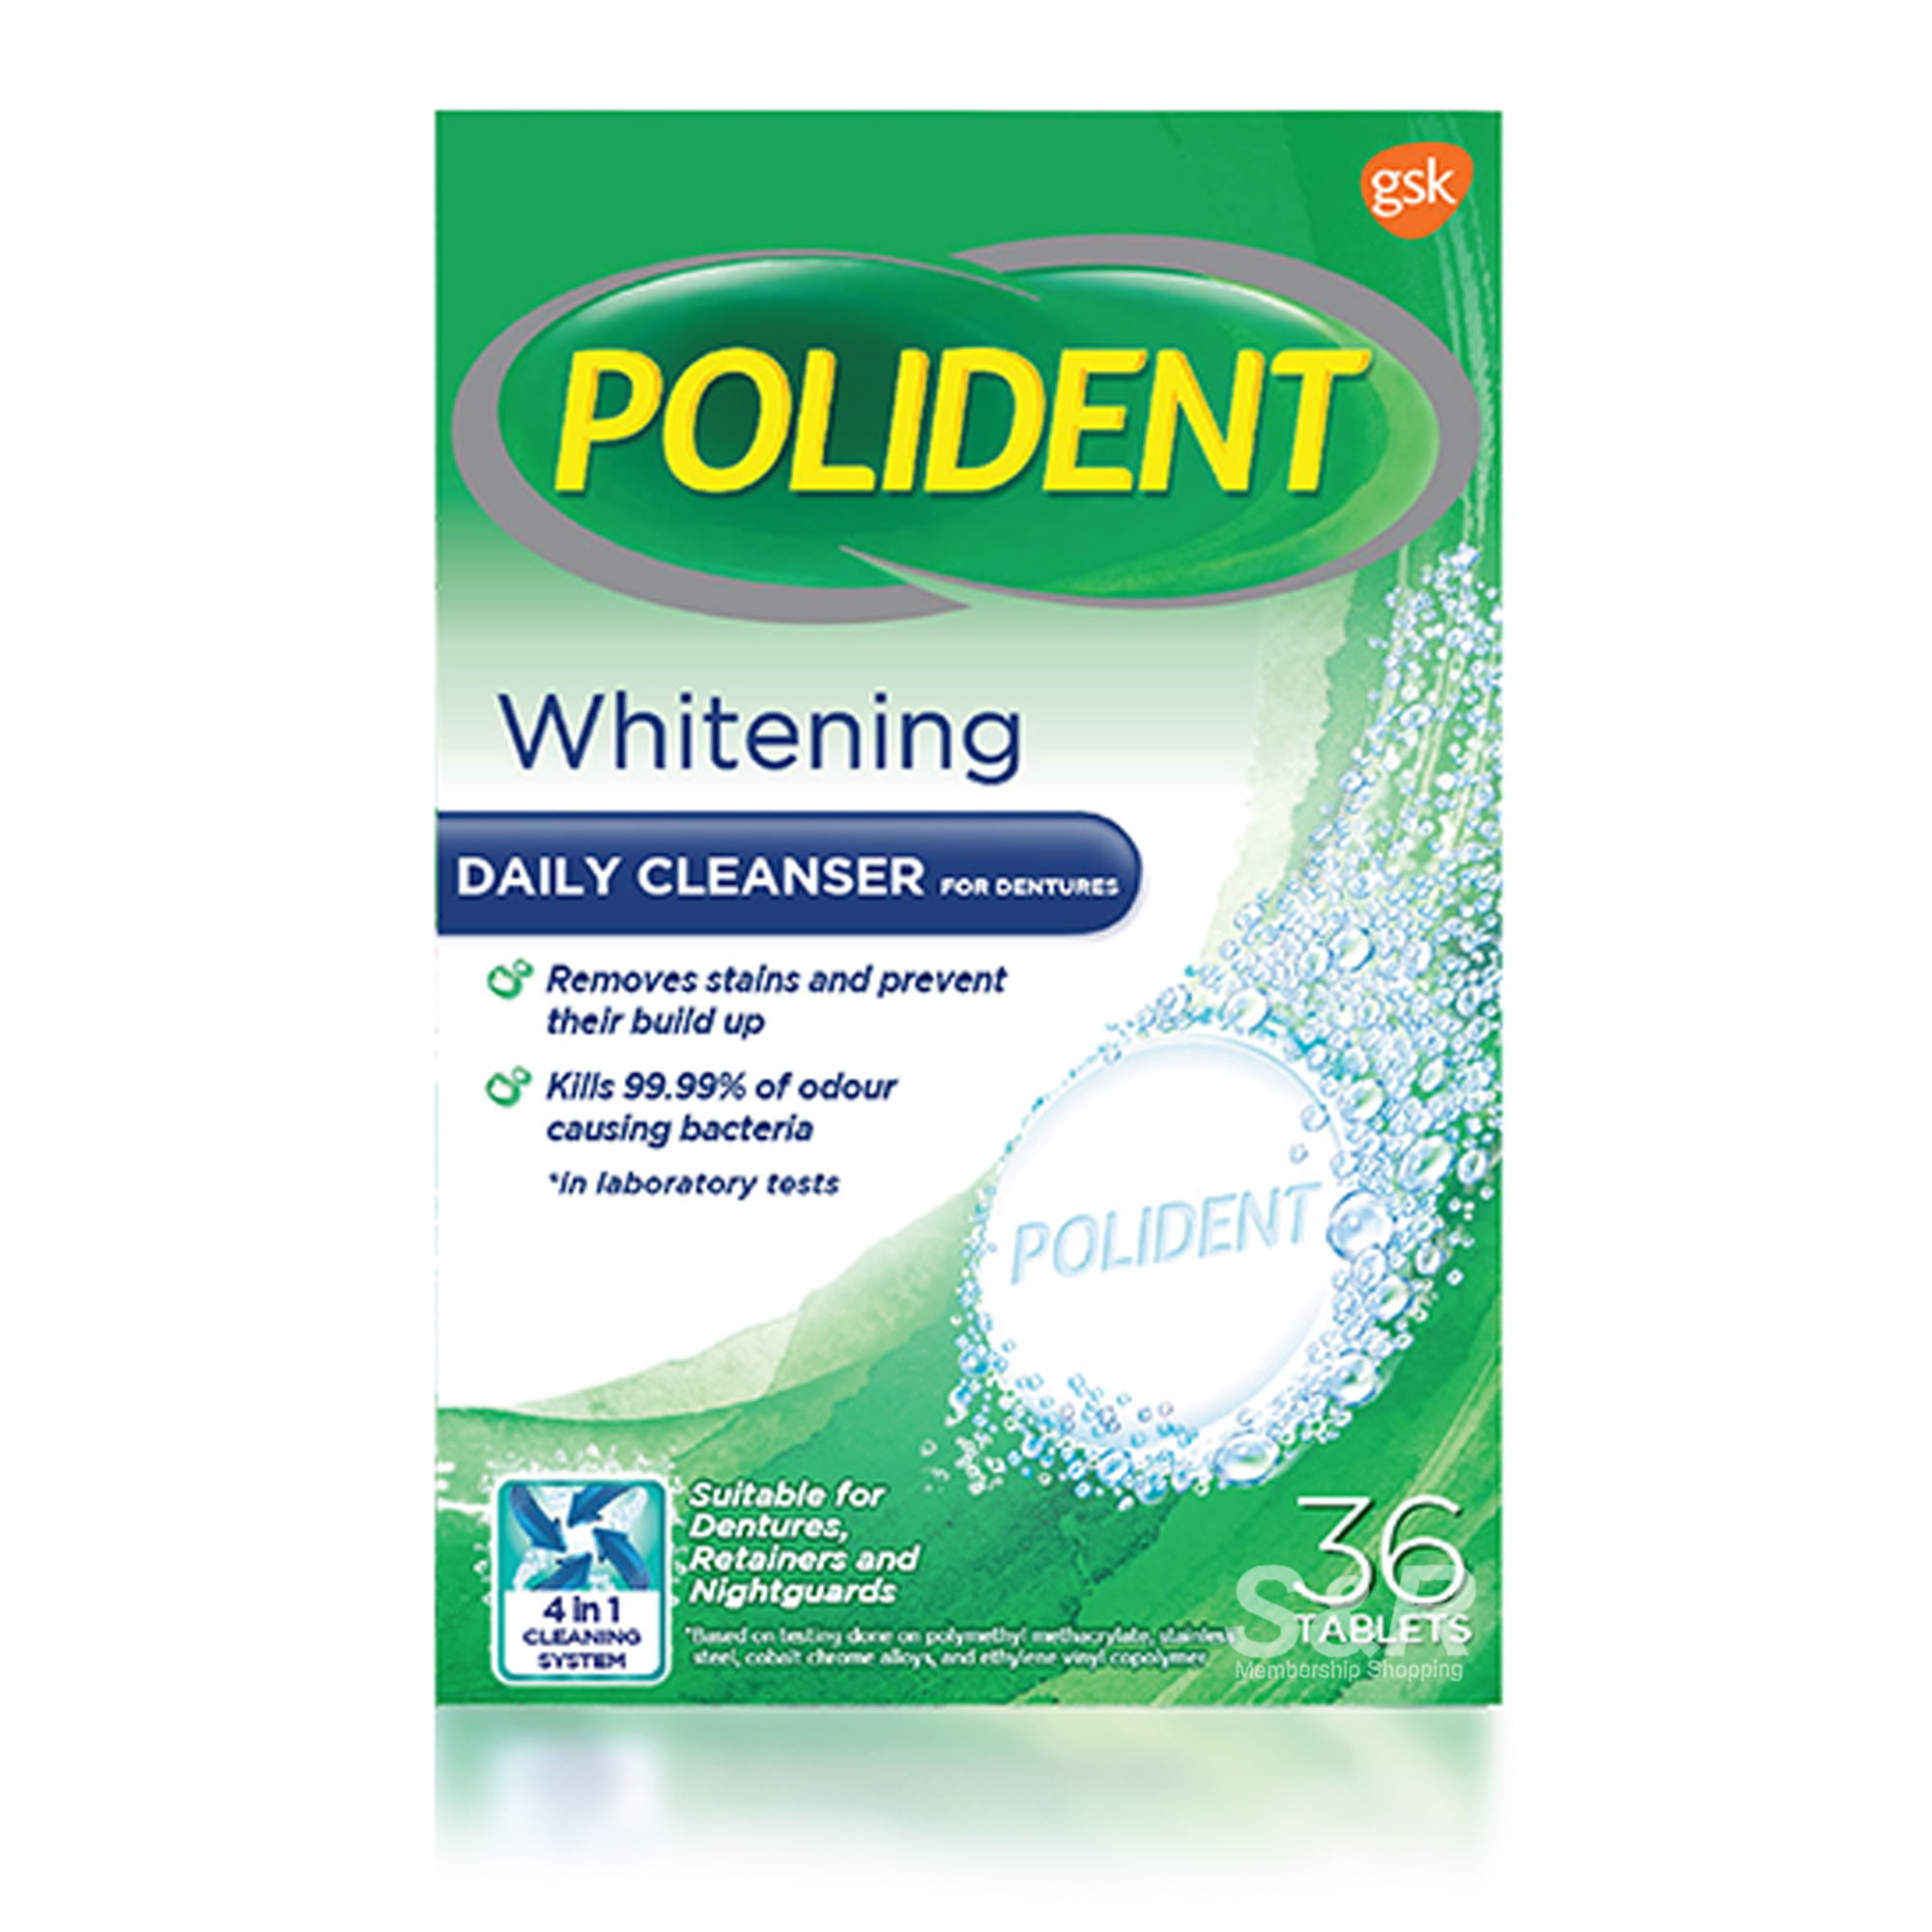 Polident Whitening Daily Cleanser for Dentures 36pcs